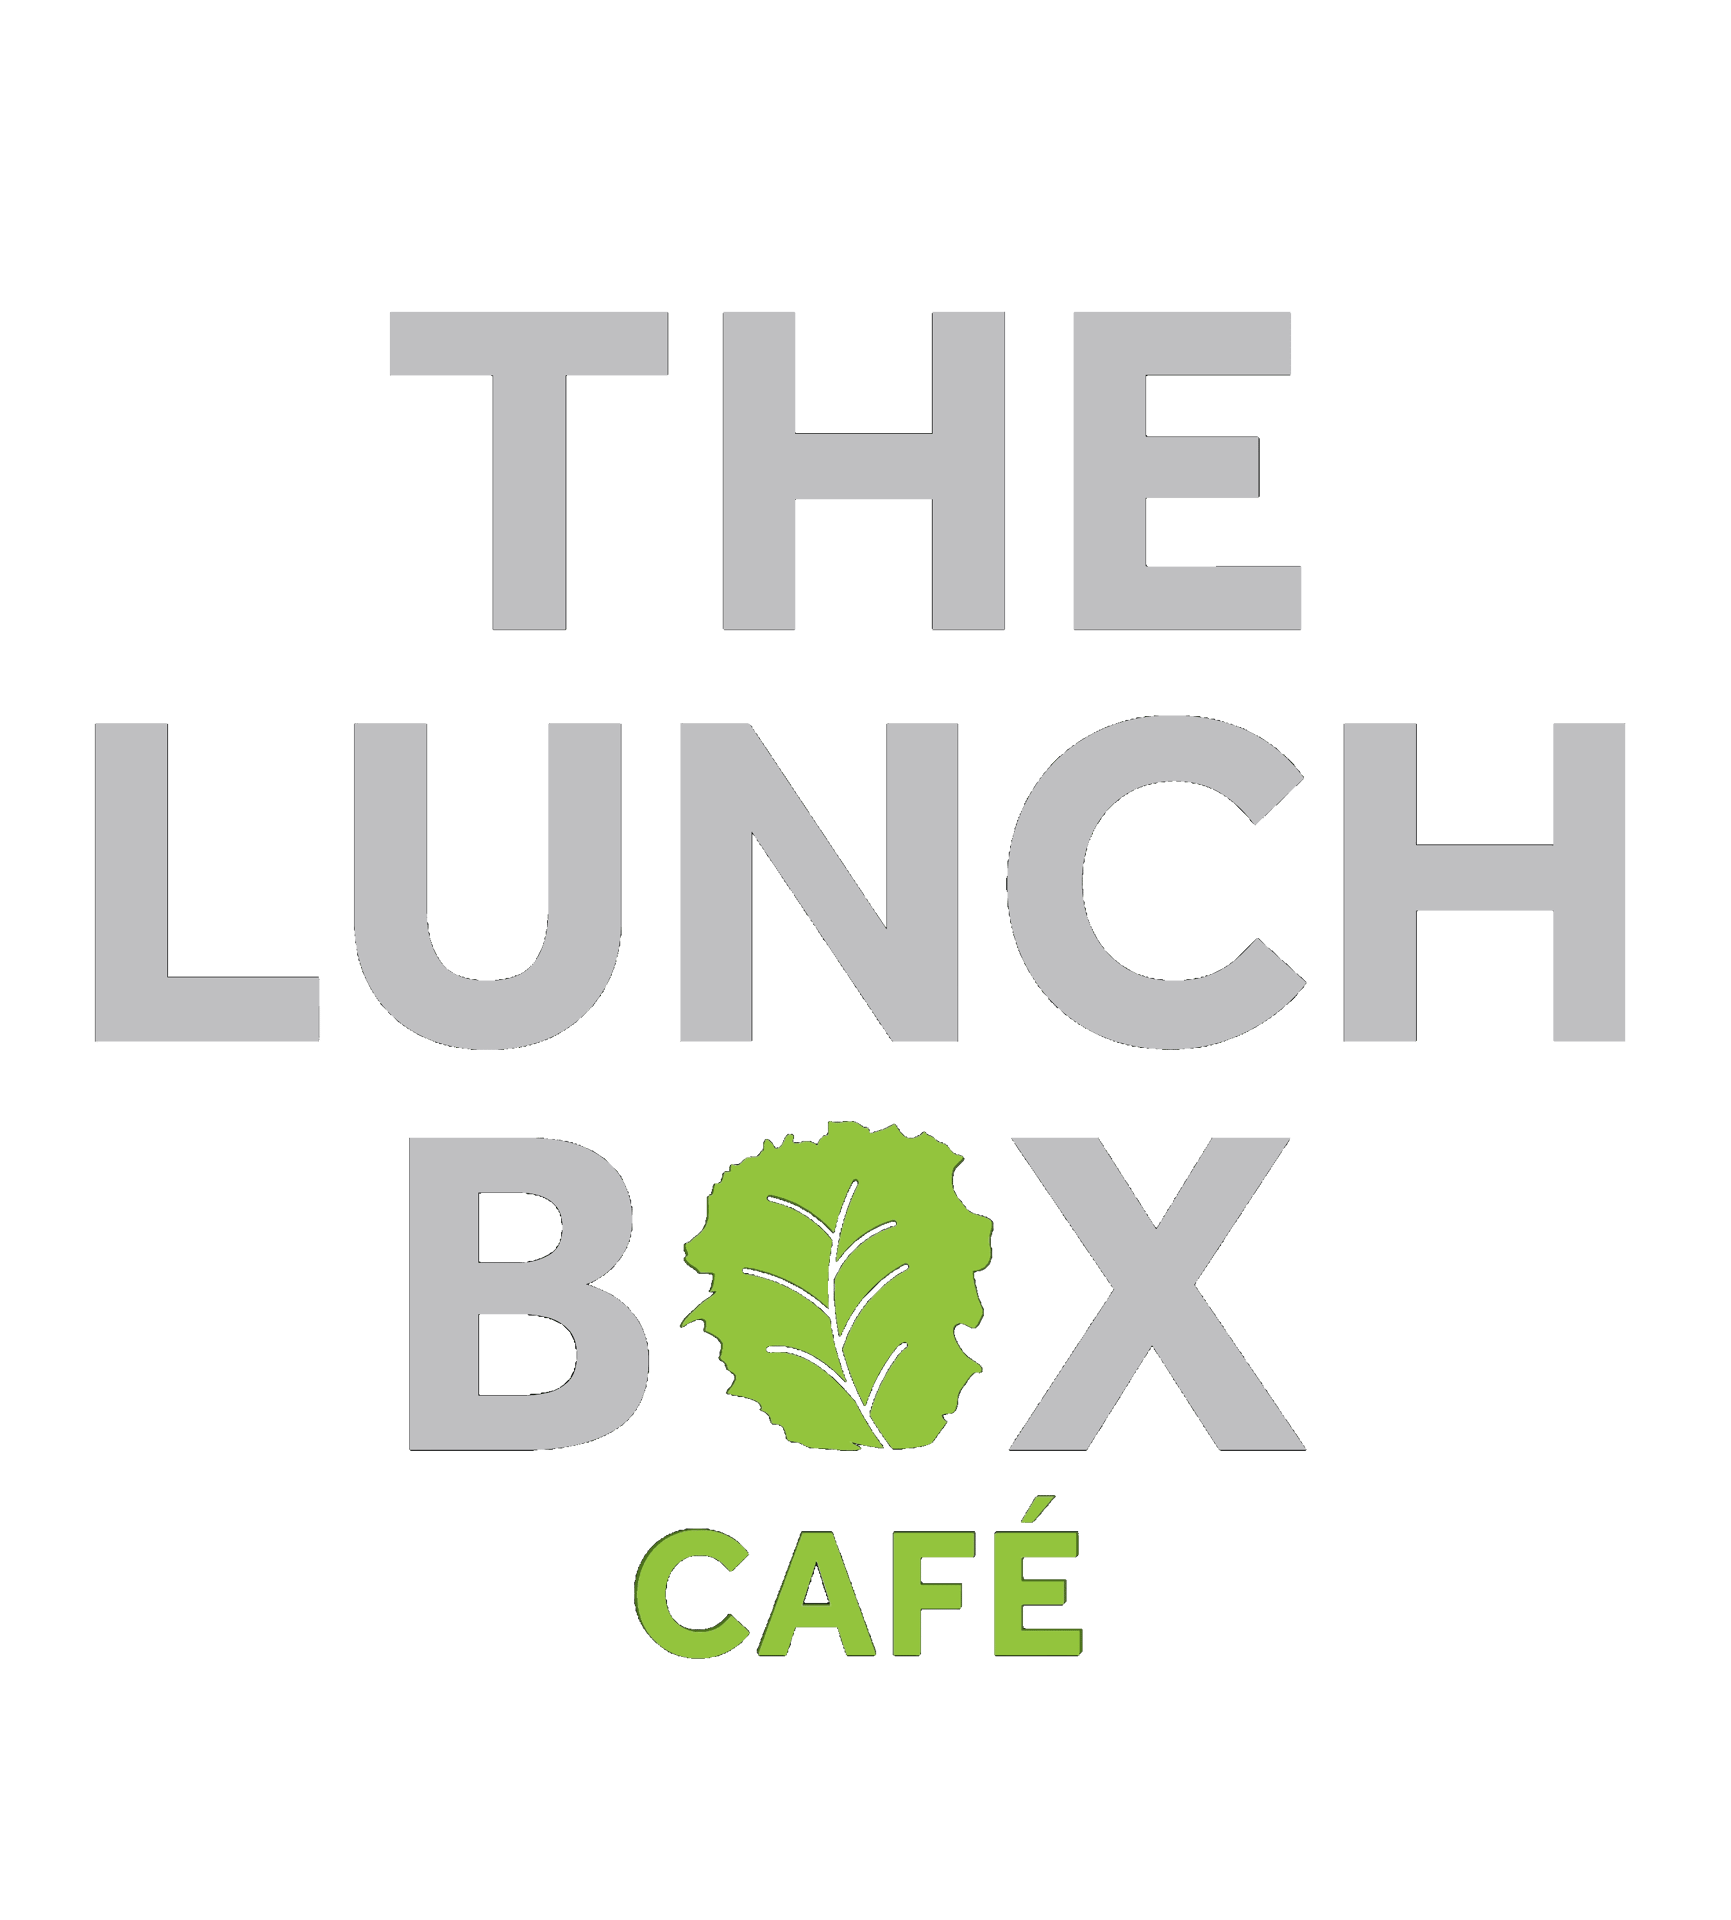 lunch box logo